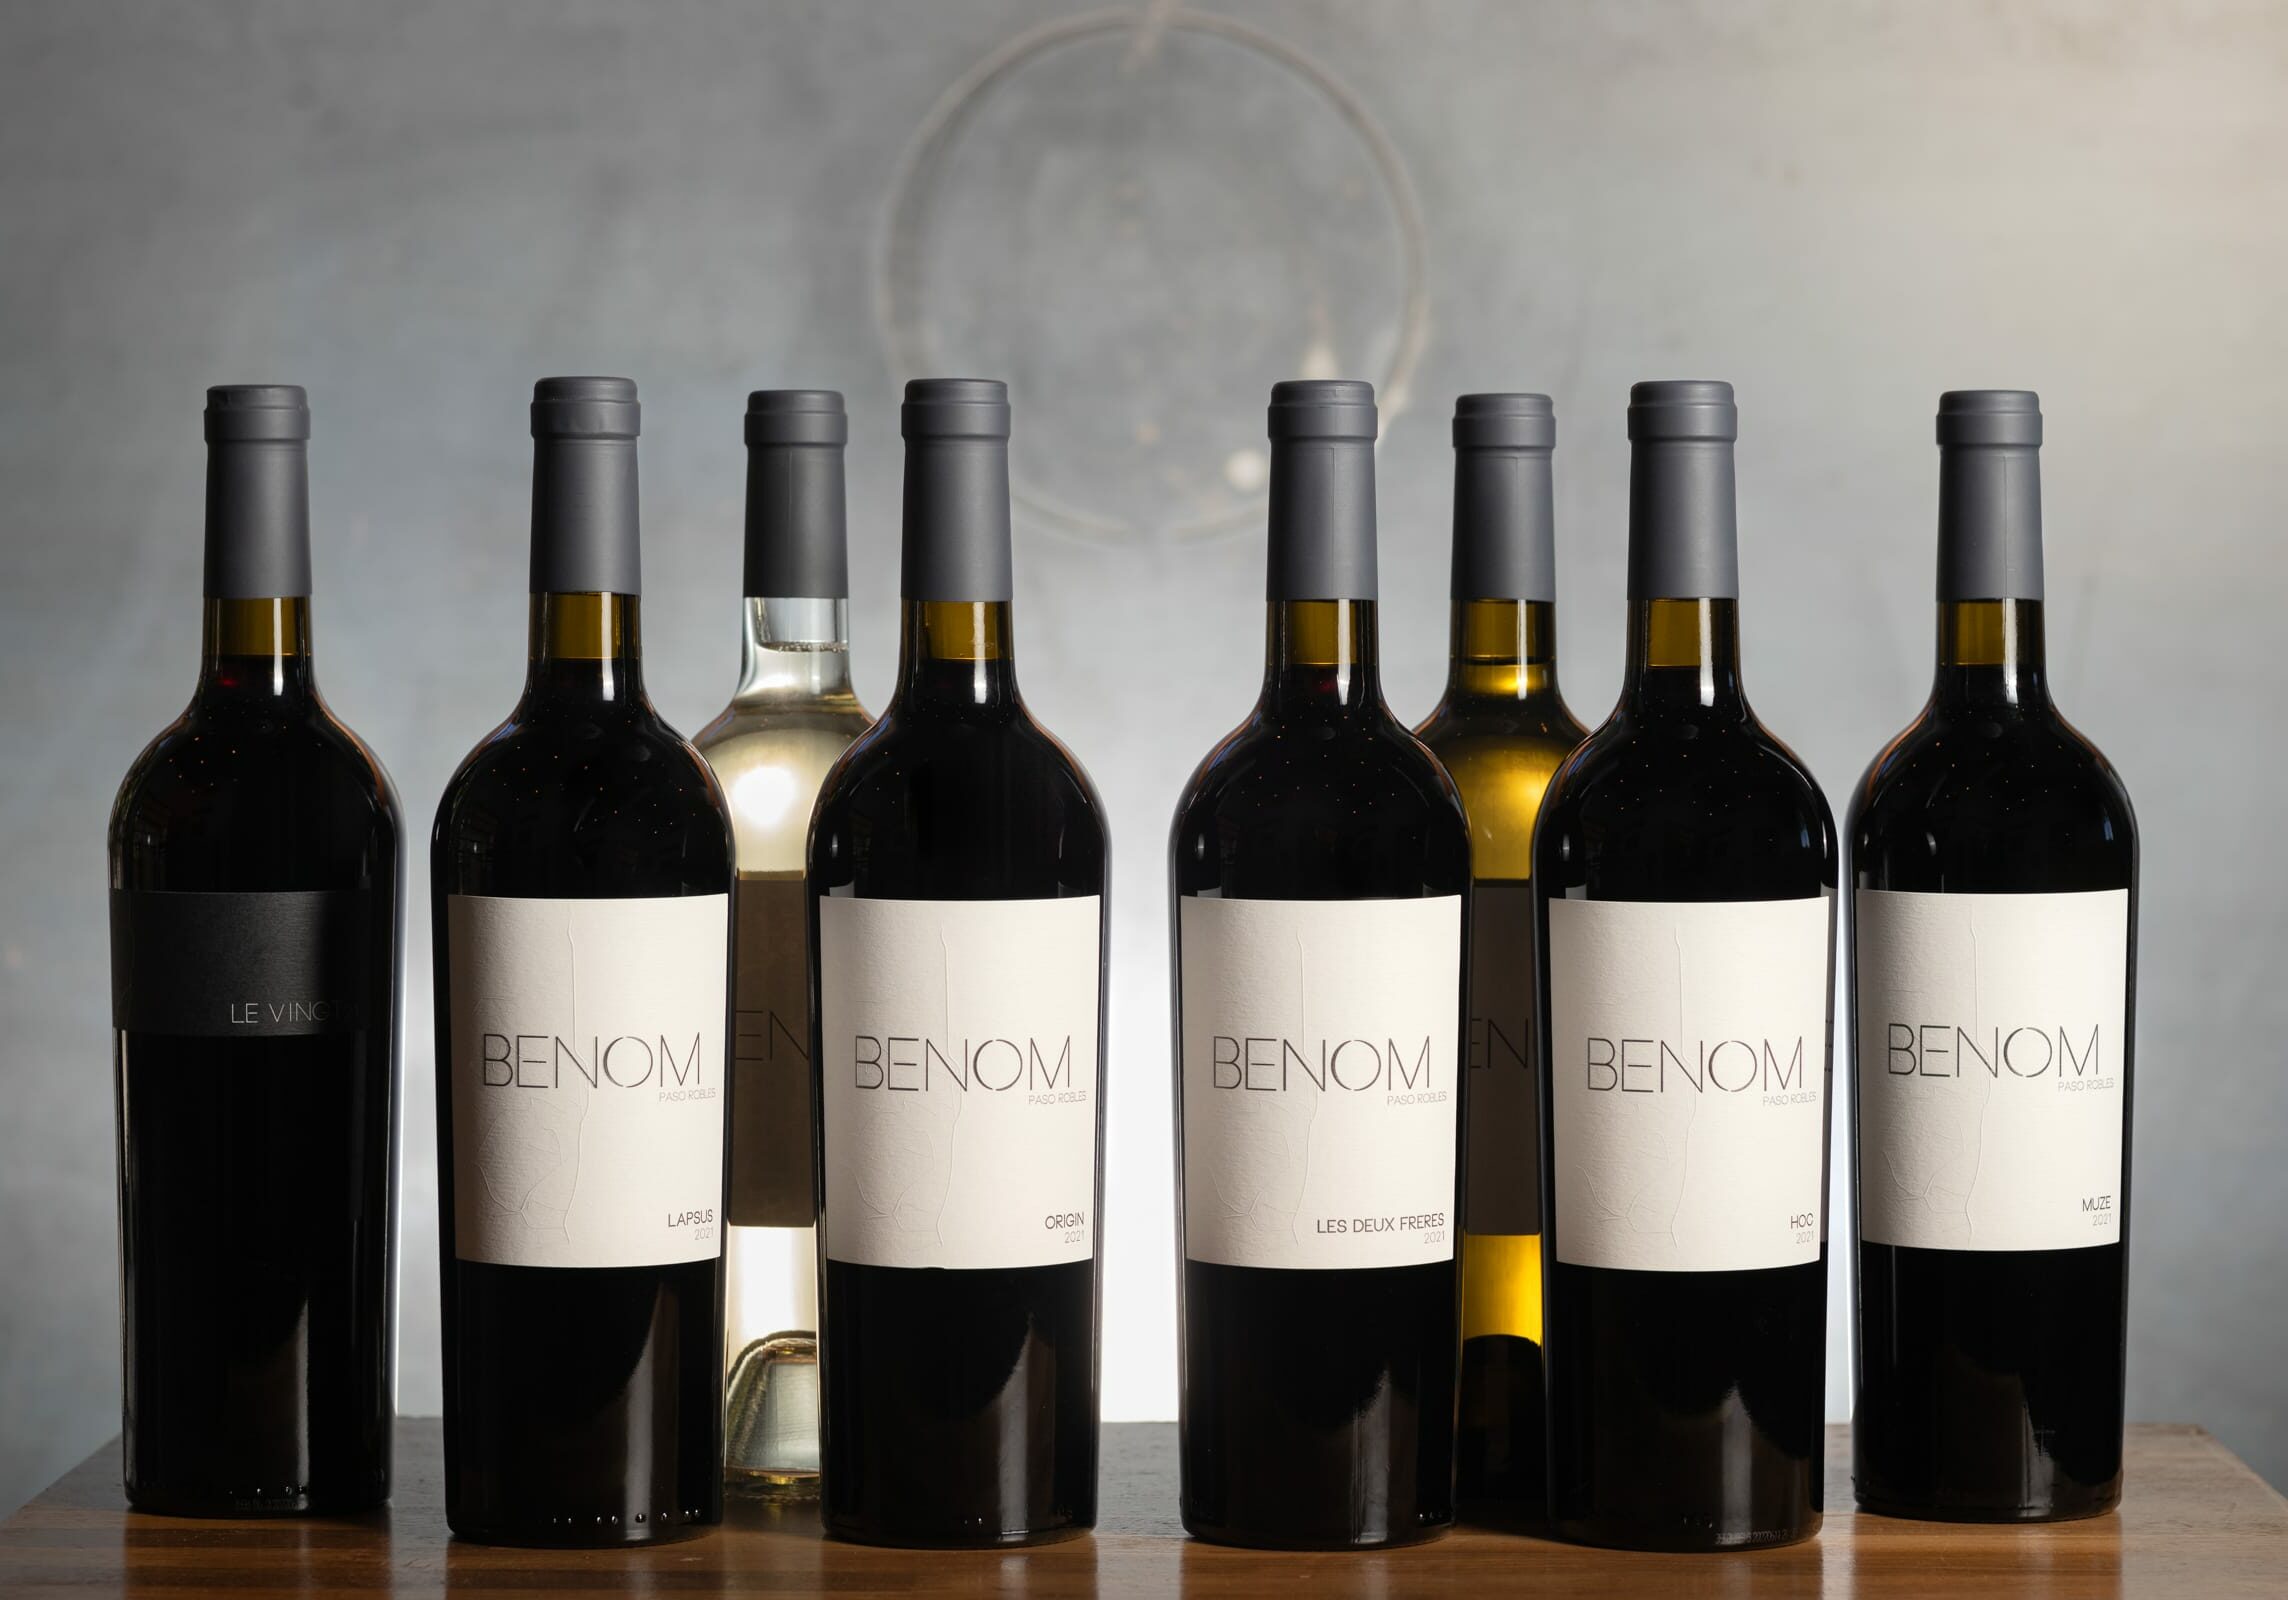 8 BENOM red and white wine bottles